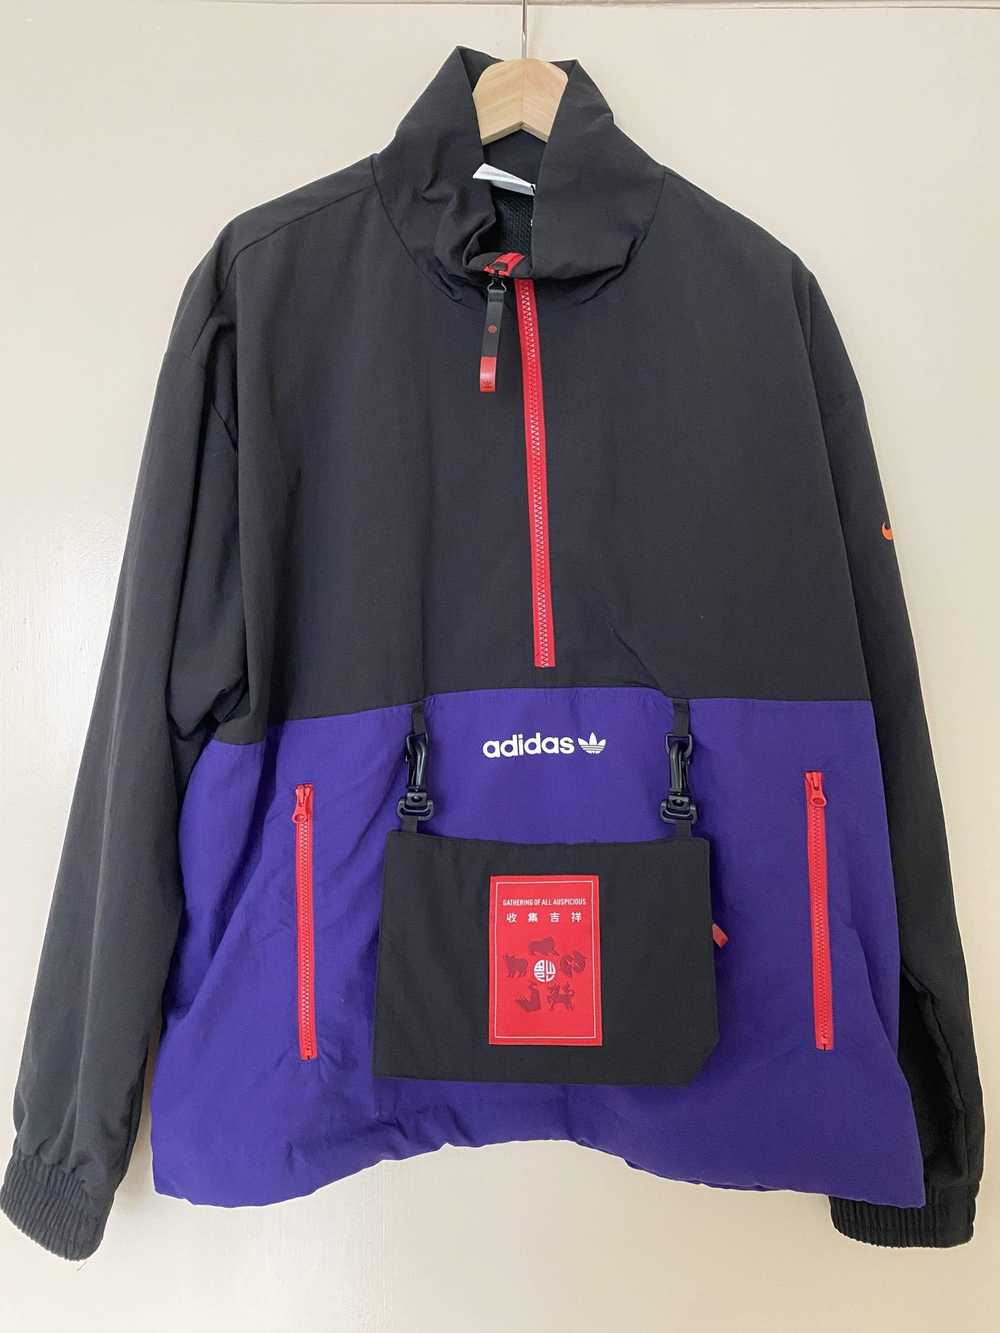 Adidas LNY Half-Zip Windbreaker Jacket - image 1